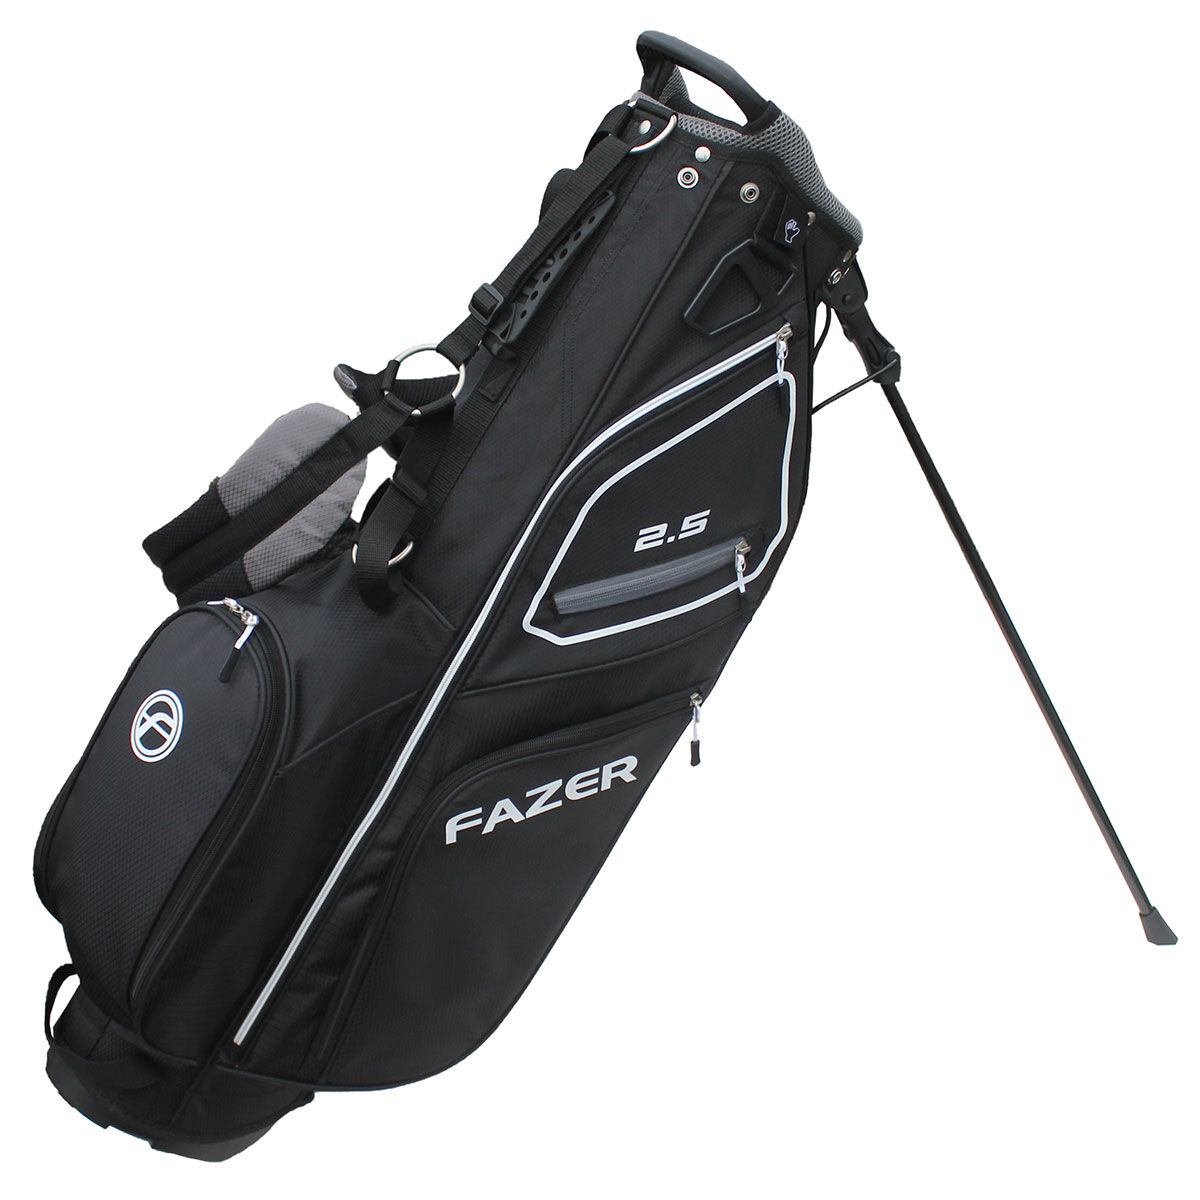 Fazer 2.5 Lightweight Golf Stand Bag, Black/silver, One Size | American Golf